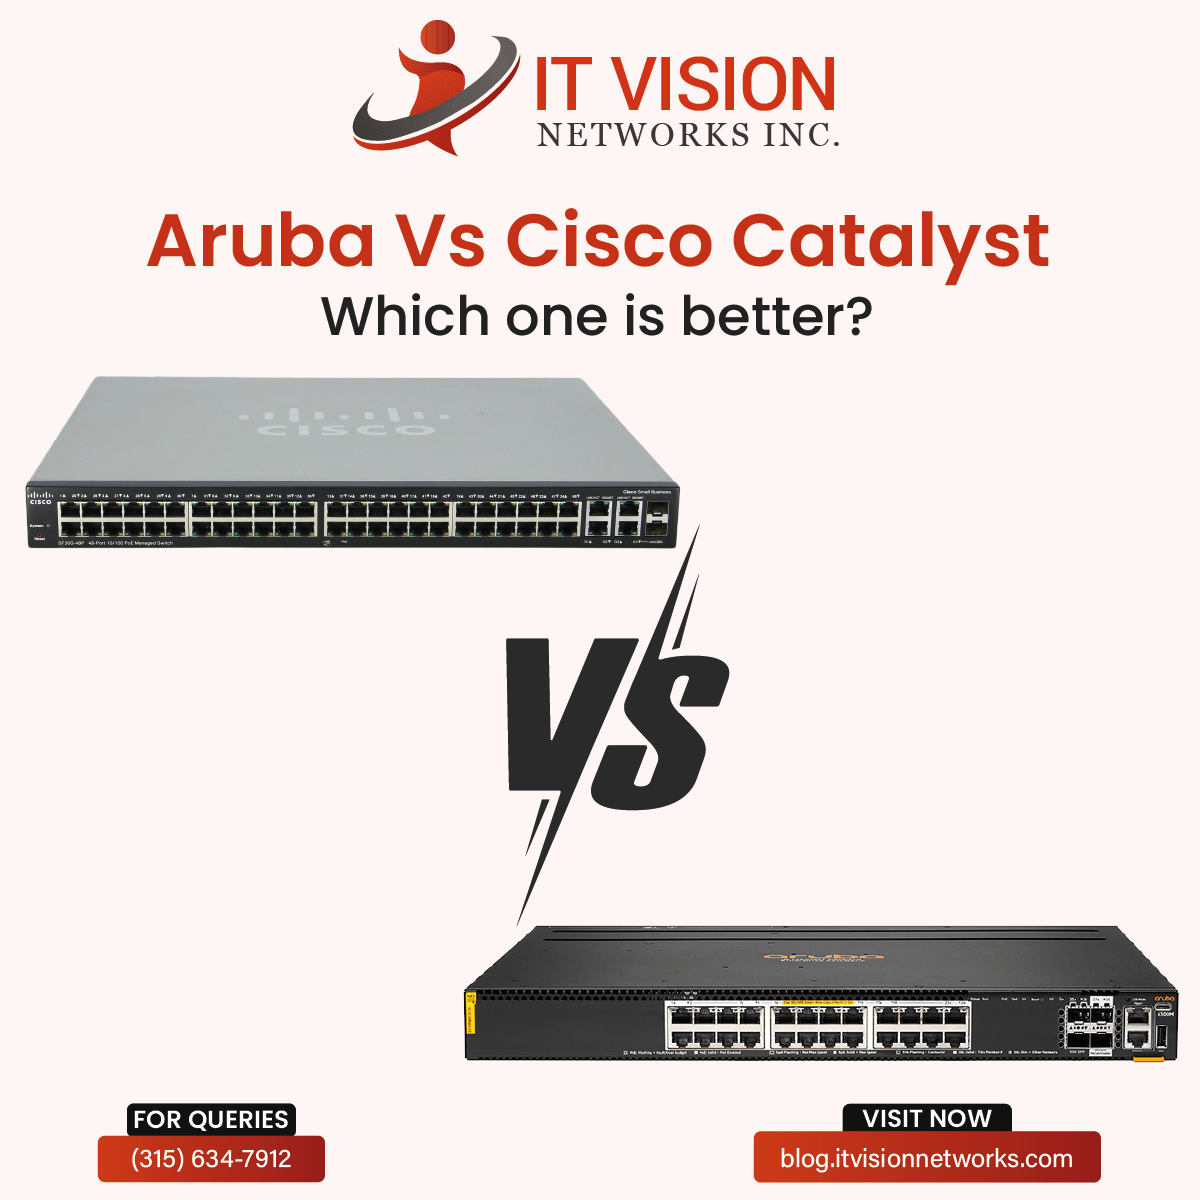 Aruba vs Cisco Catalyst - IT Vision Networks Inc.